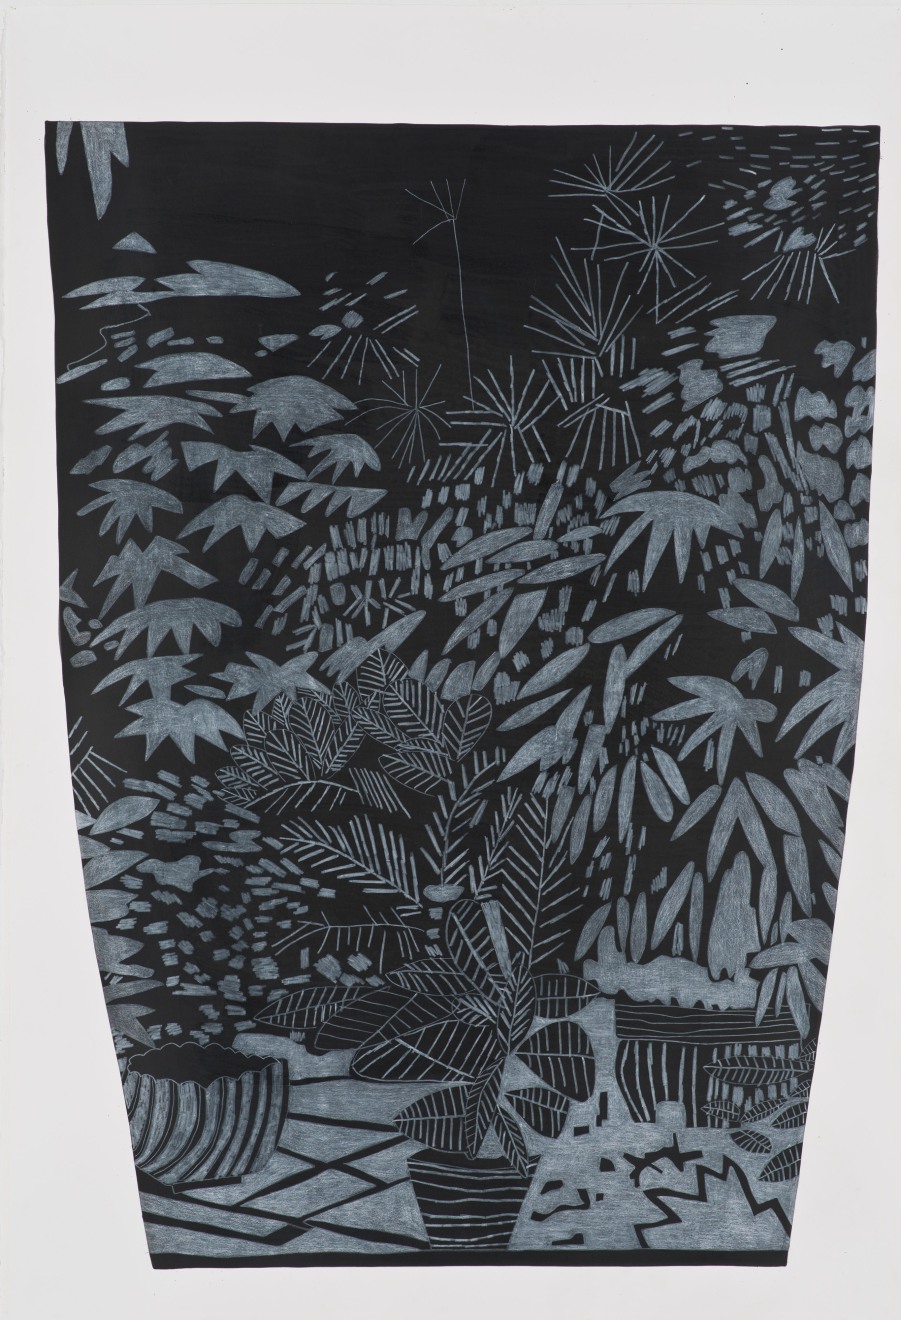 Jonas Wood B+W Landscape Pot 1, 2014